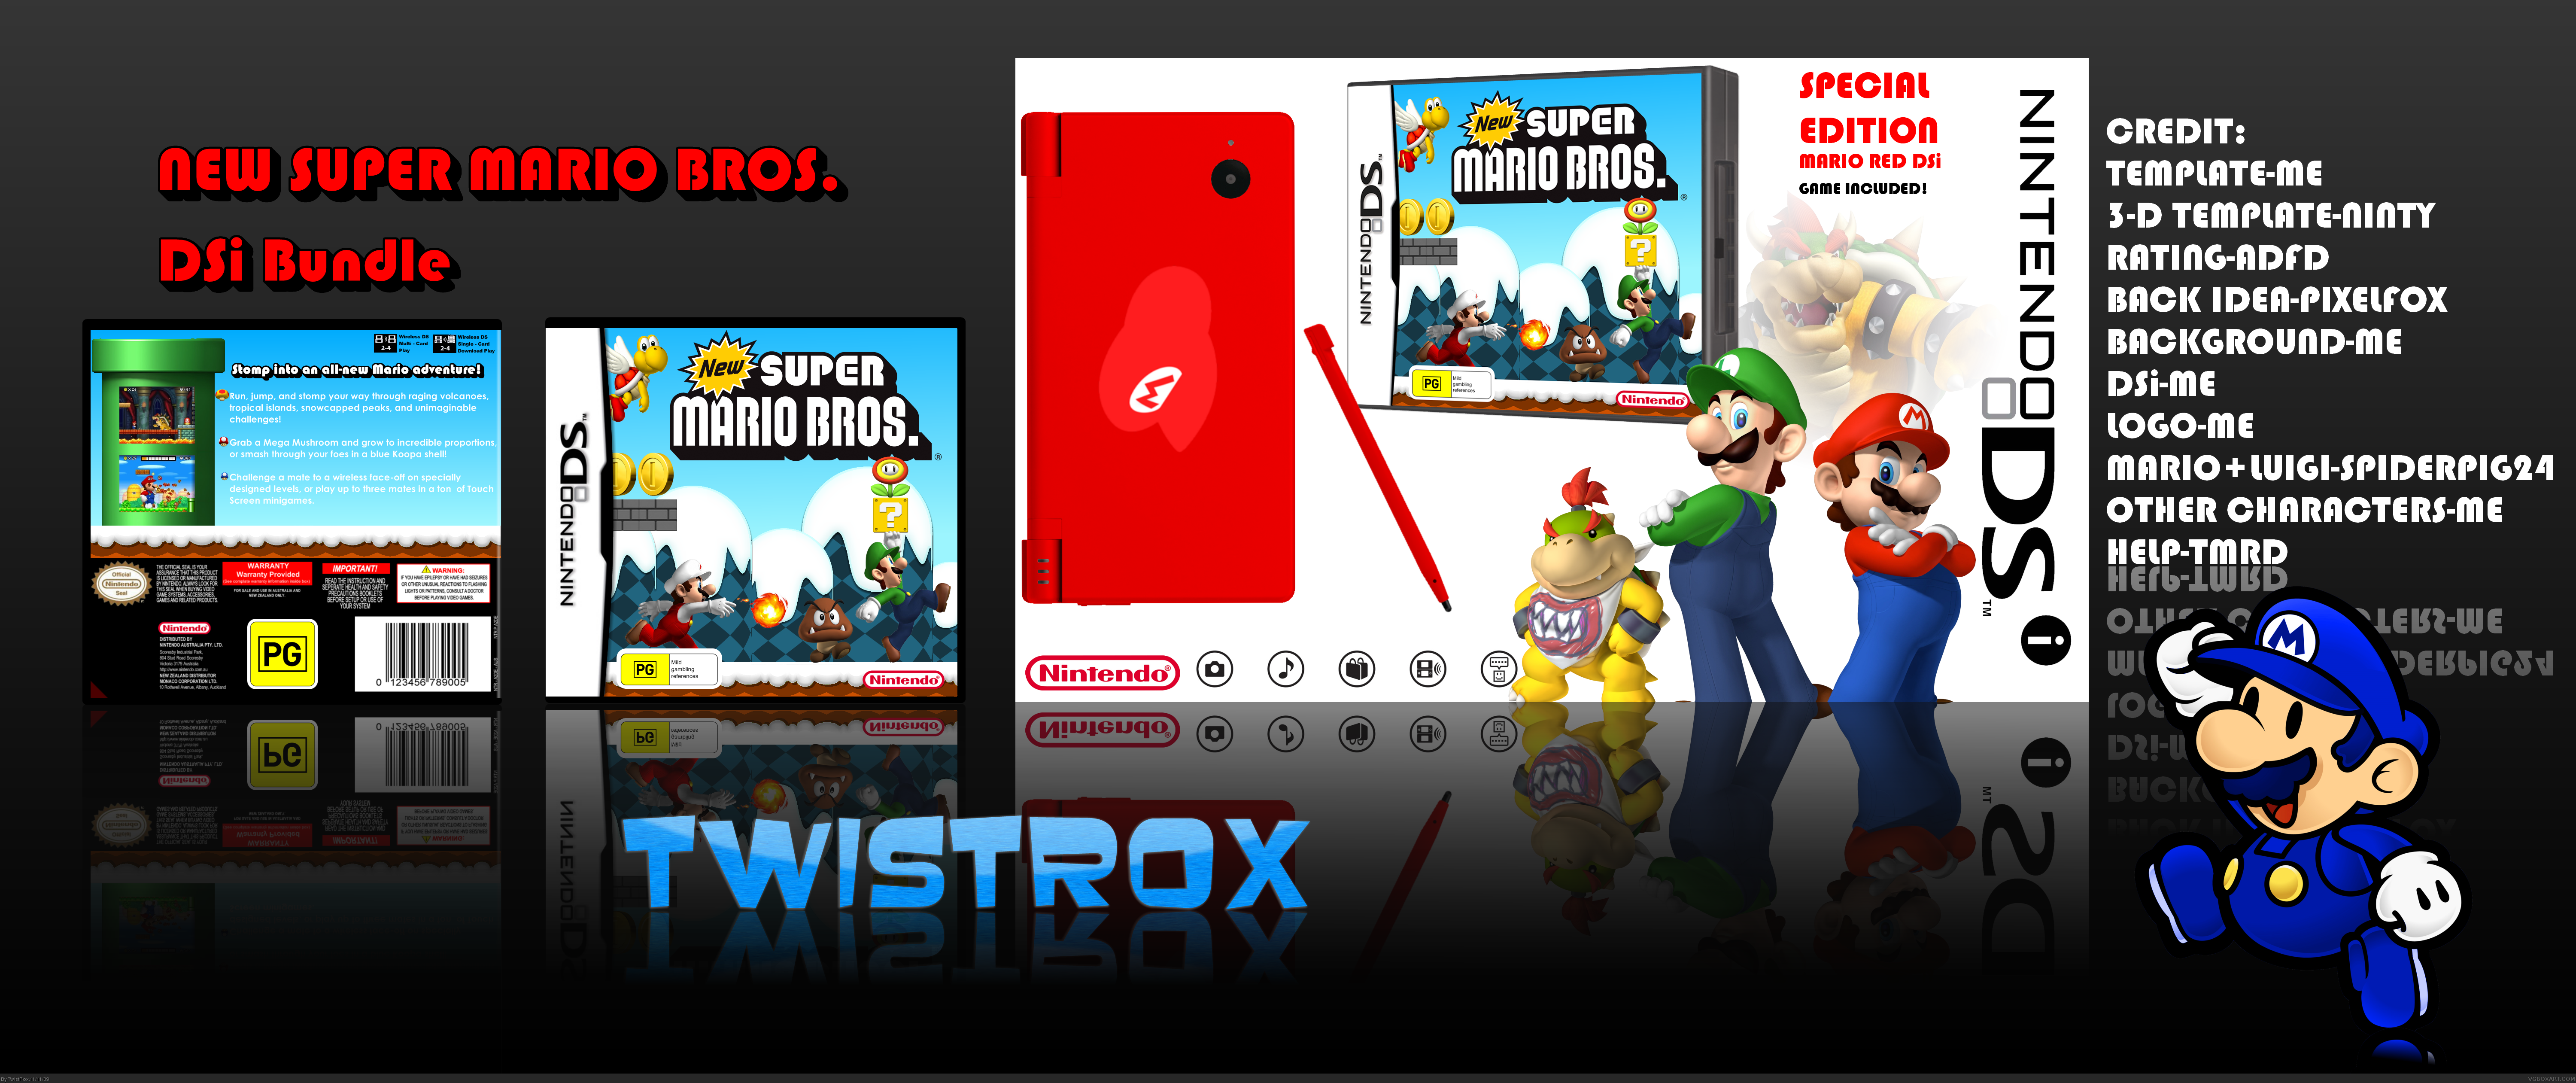 New Super Mario Bros. Bundle box cover